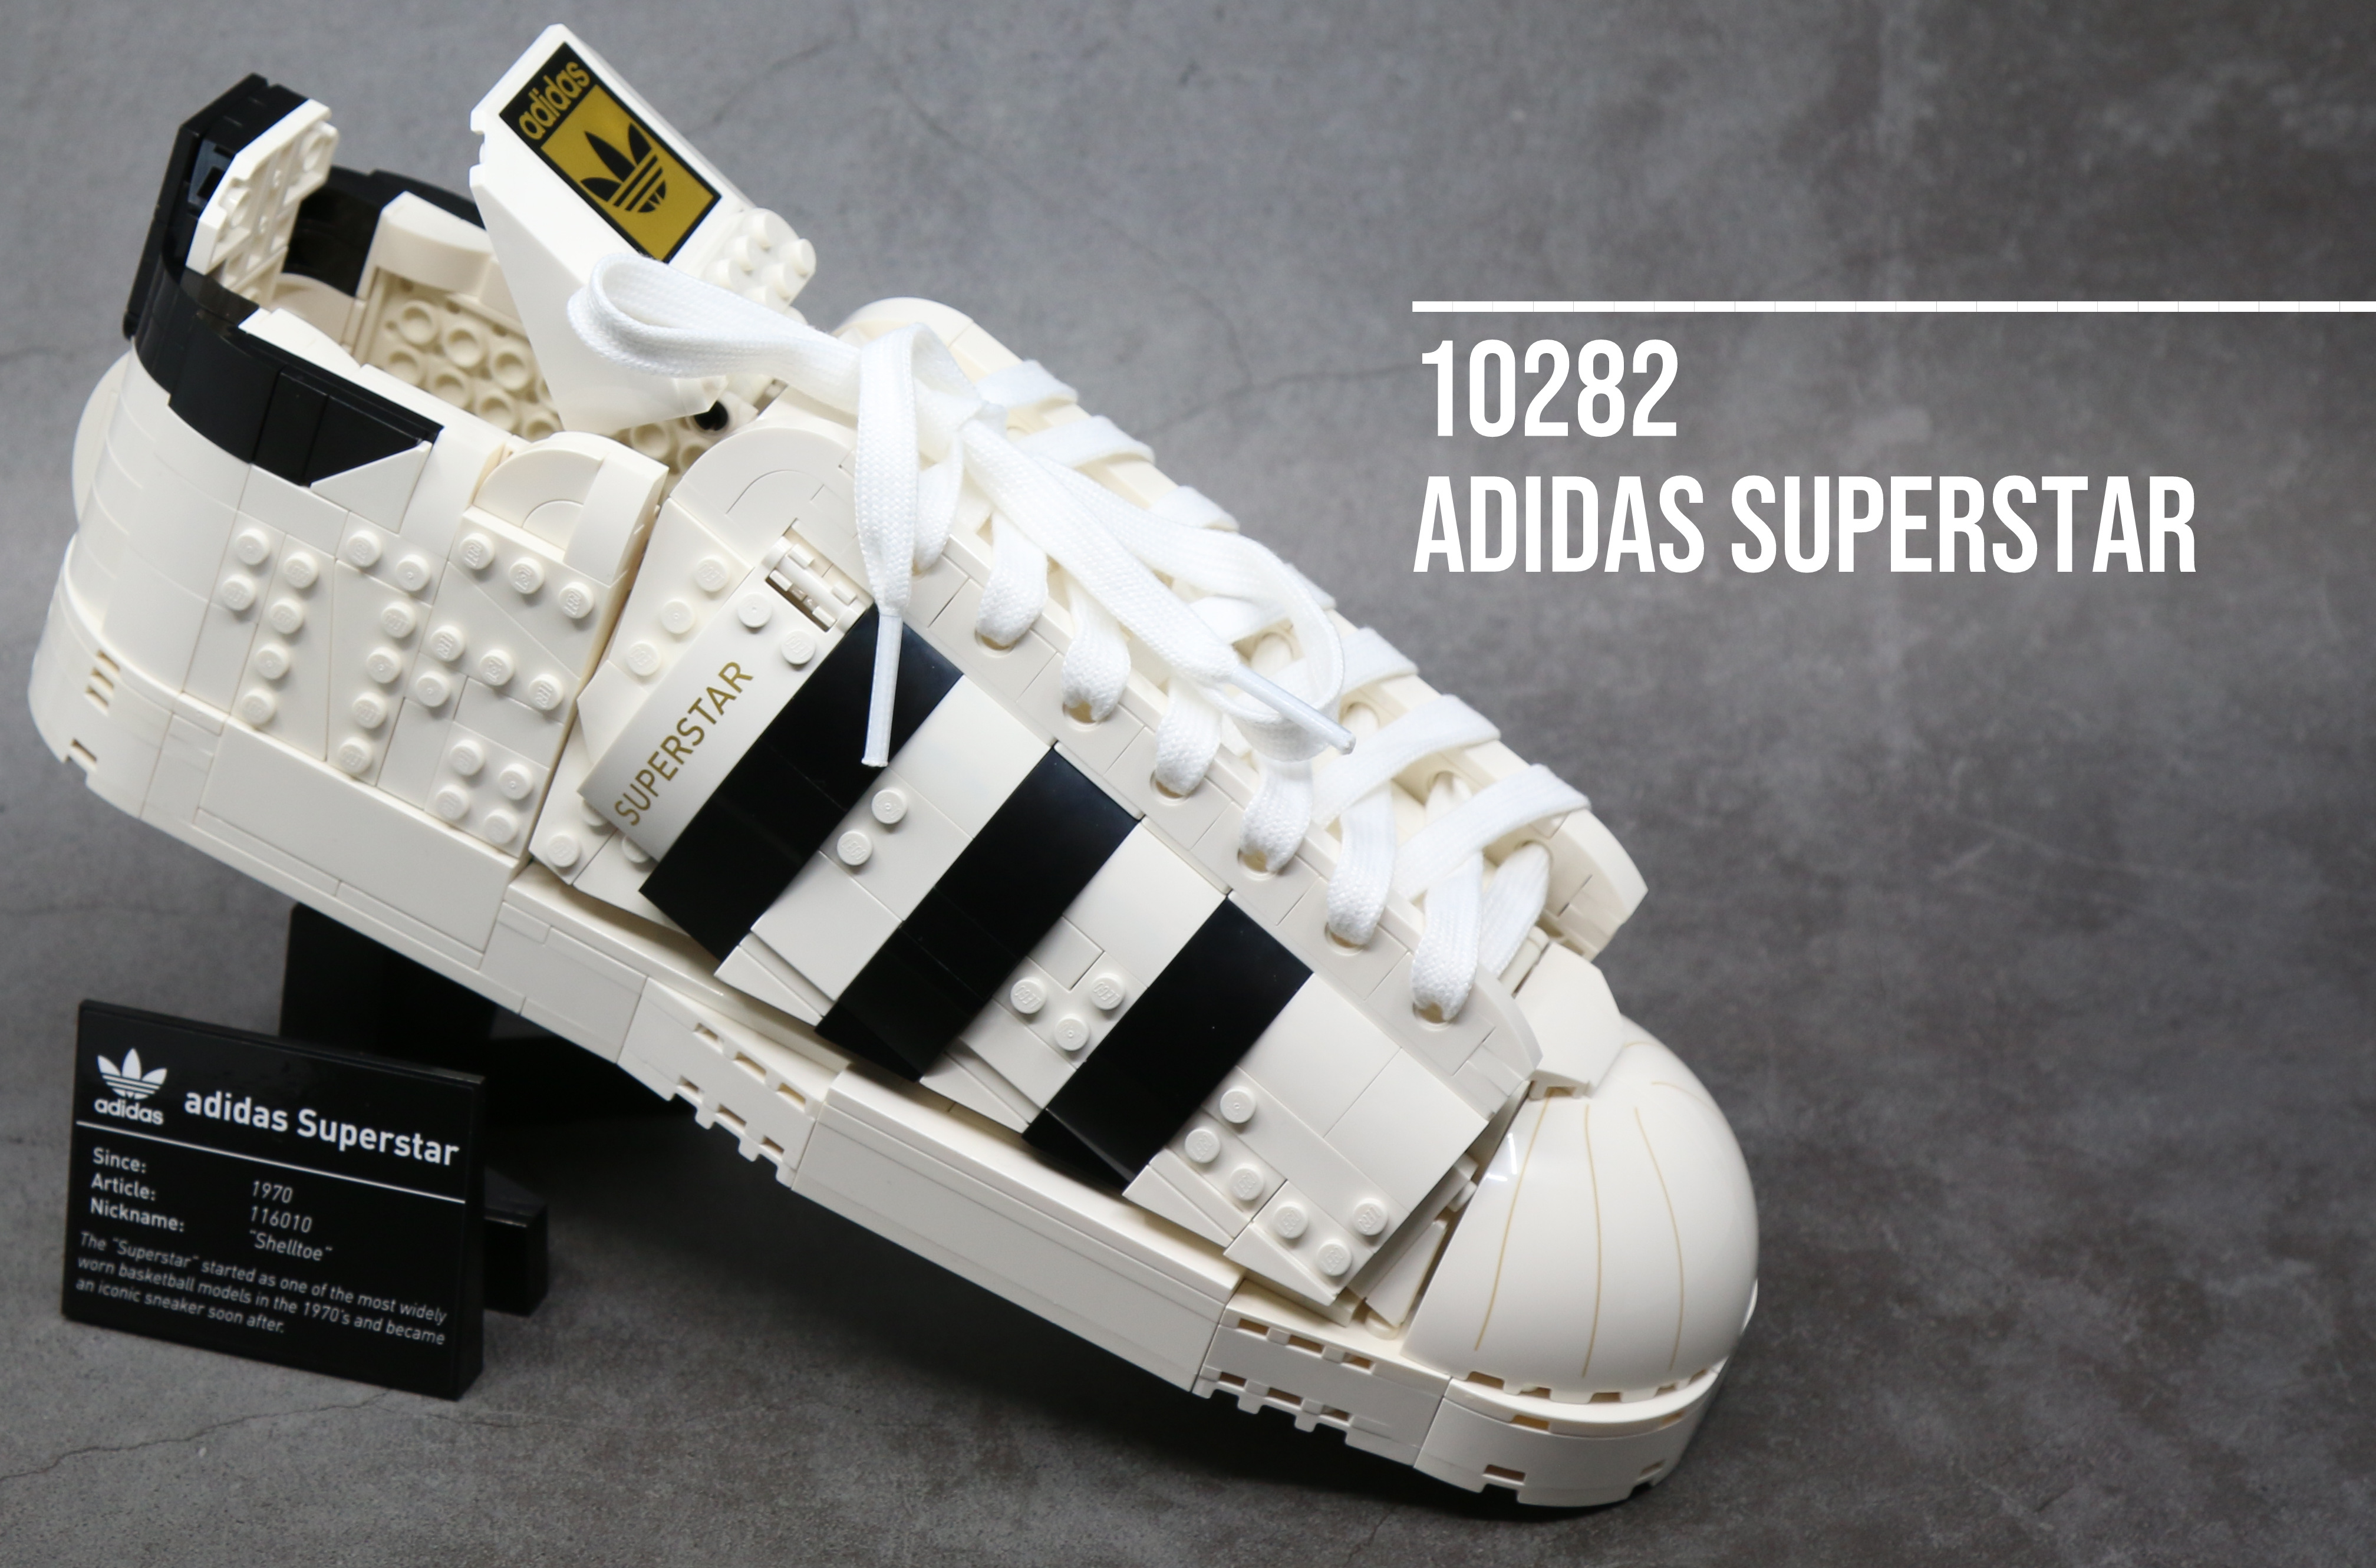 Review: LEGO 10282 Adidas Superstar - Jay's Brick Blog